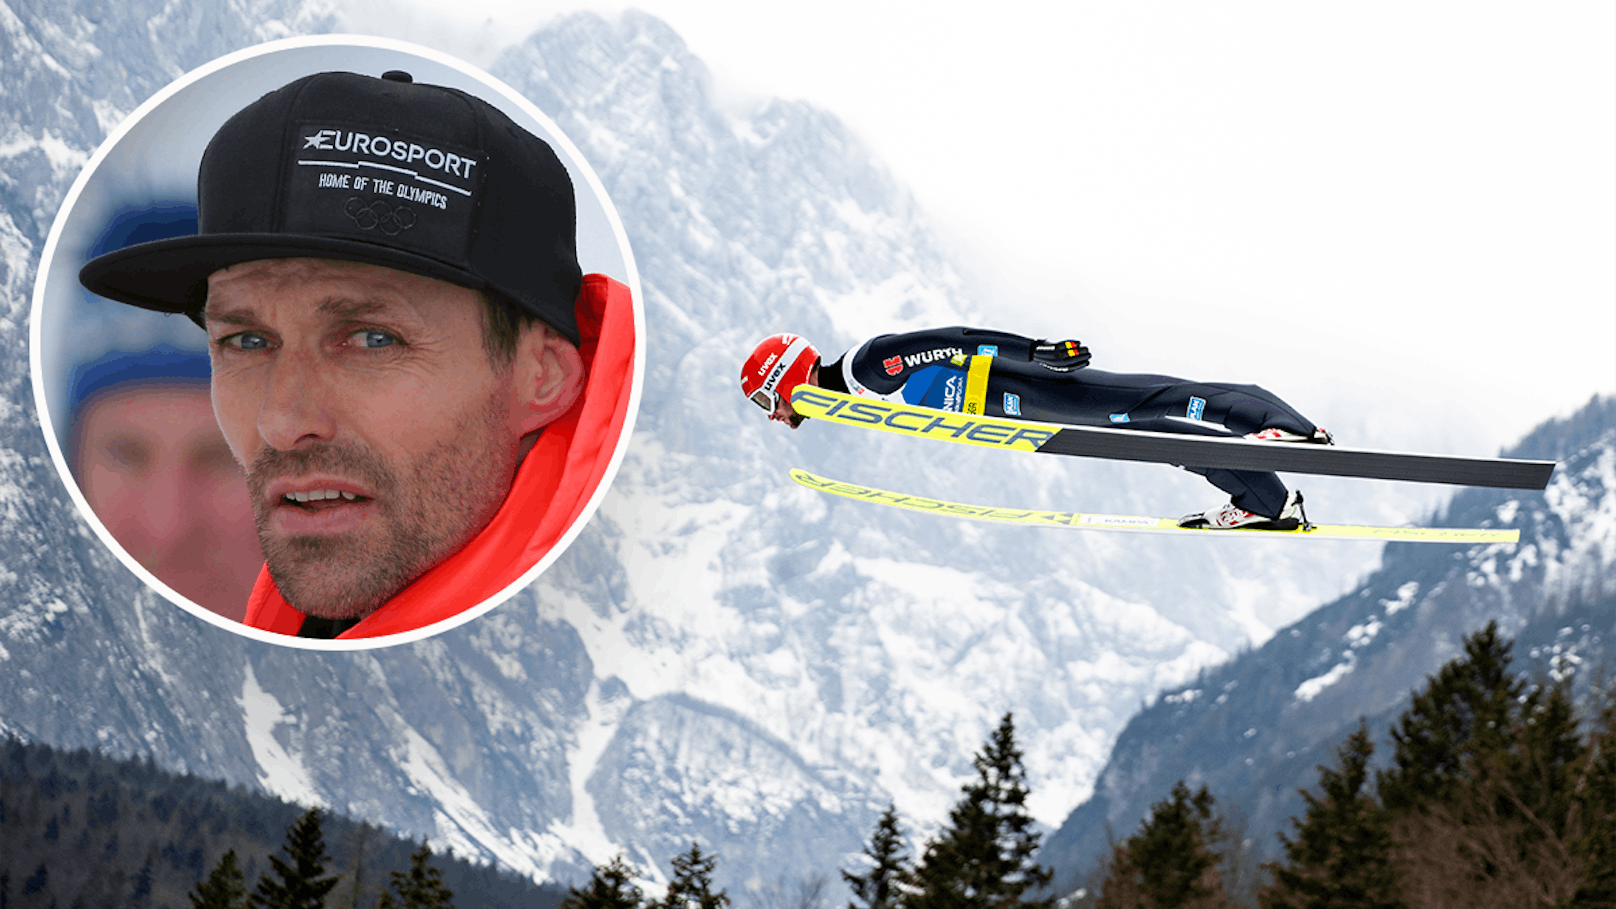 Legende warnt Skisprung-Star: "Karriereende sonst nah"